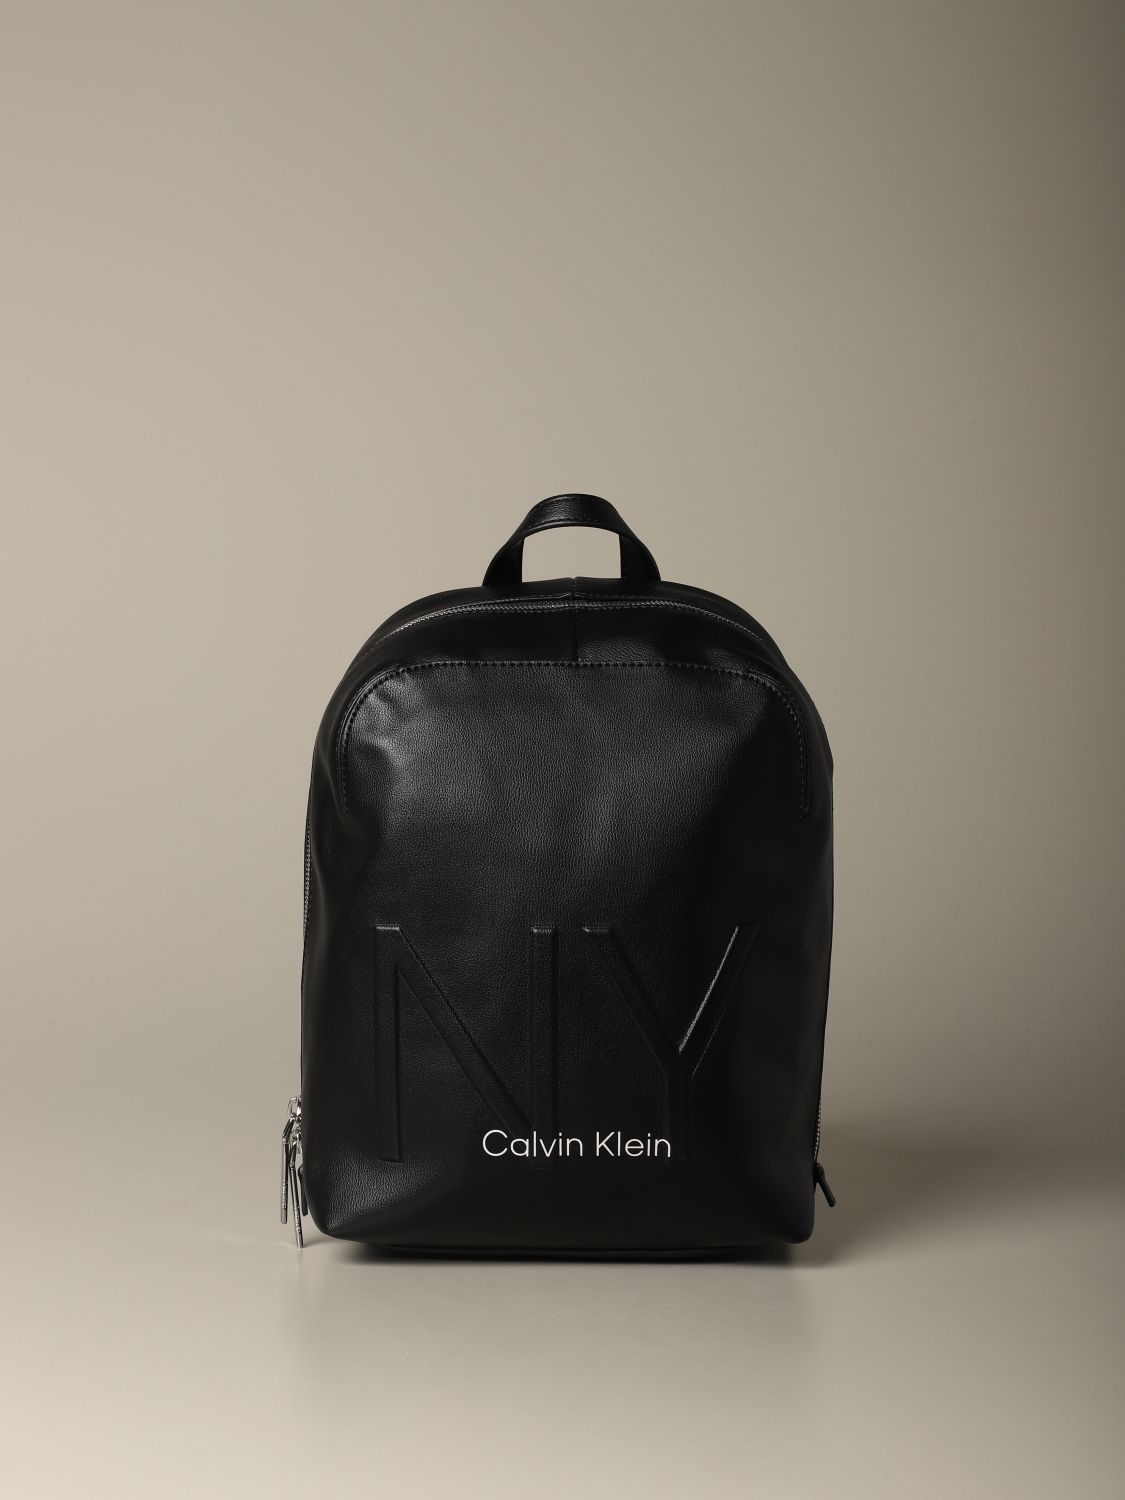 calvin klein backpack women